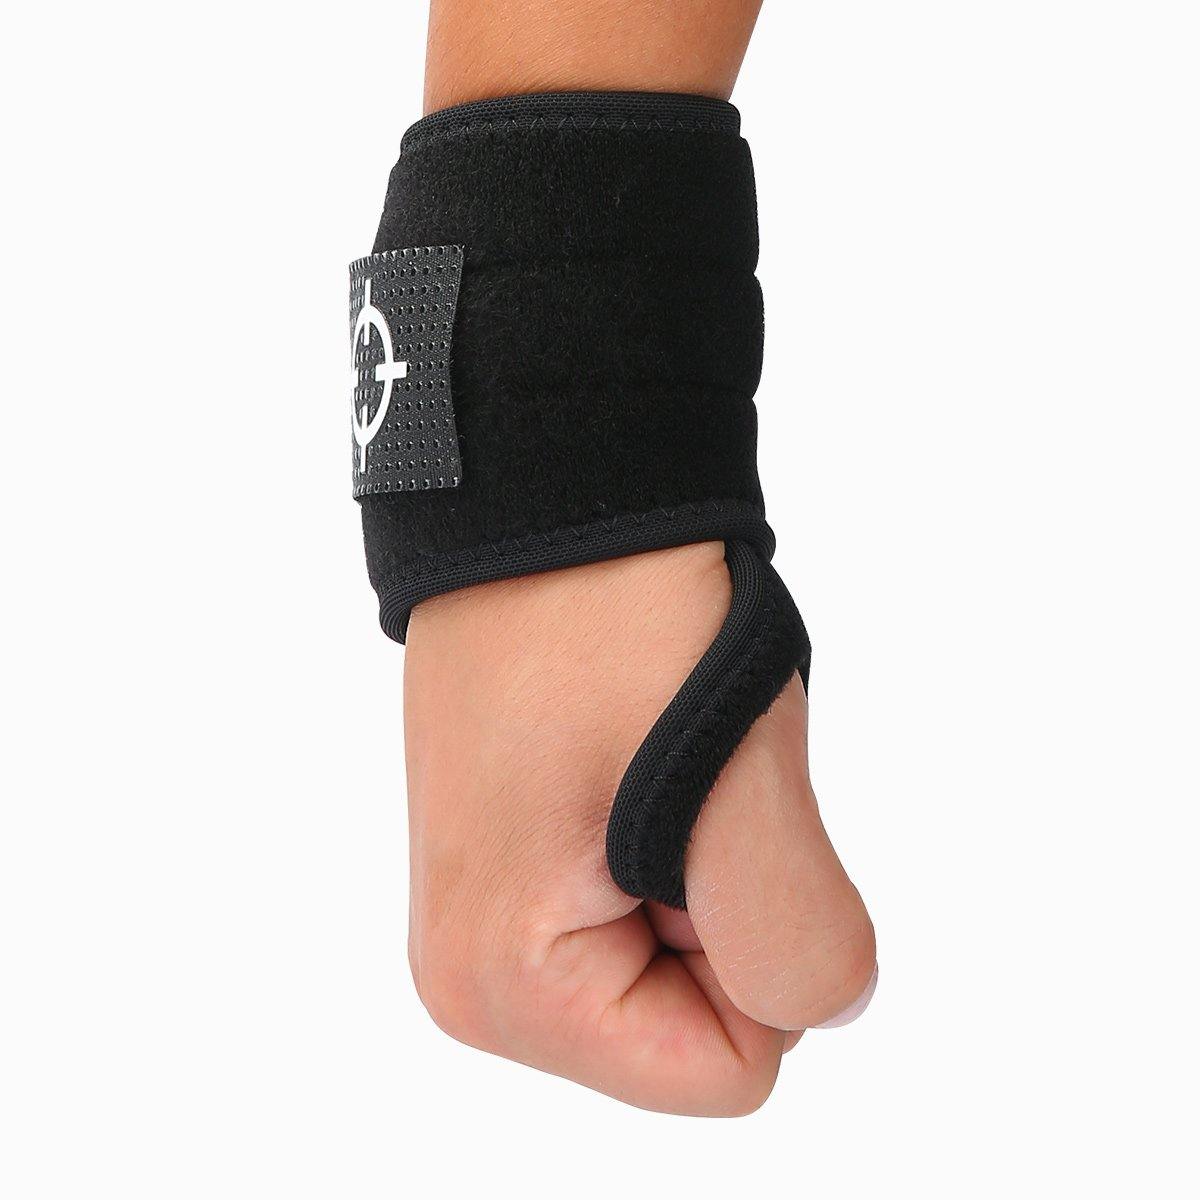 Sports Wrist Band Wrist Support Brace Sweatband Guard Sport GYM Hand Wristband Protector - Rigorer Official Flagship Store